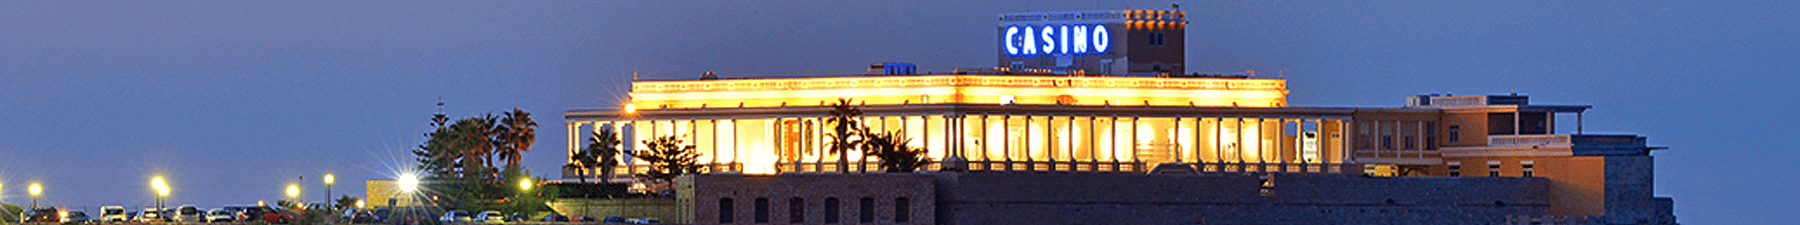 Grootste casino van Europa komt op Cyprus